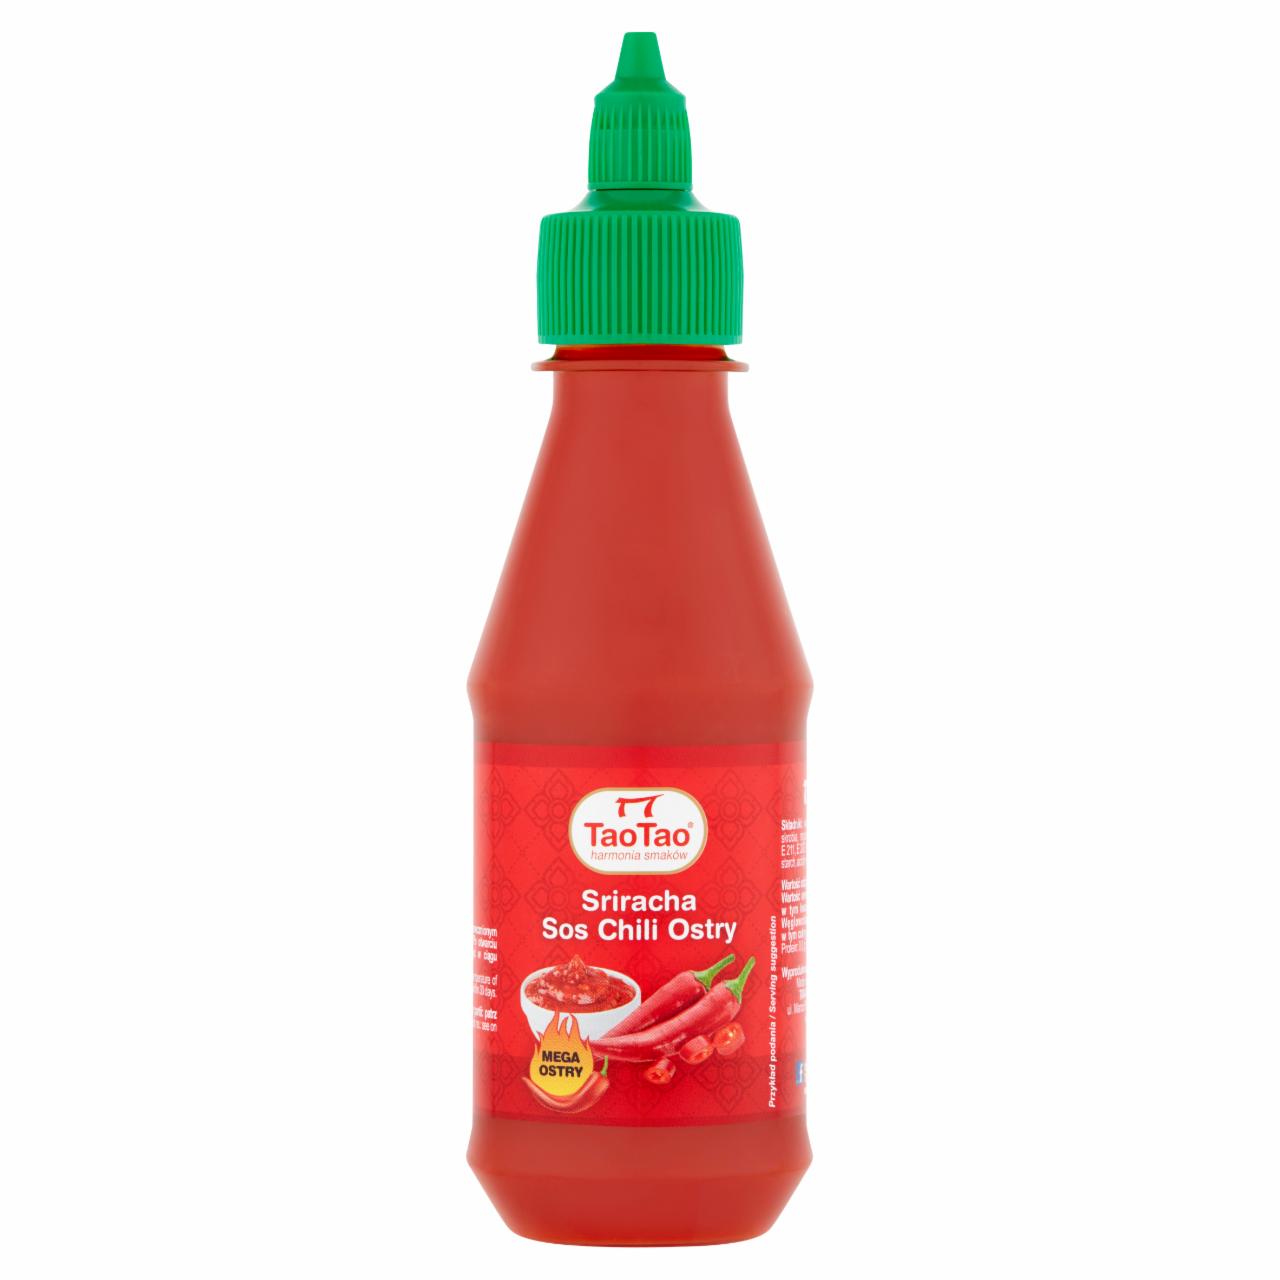 Zdjęcia - Tao Tao Sriracha Sos chili ostry 200 ml